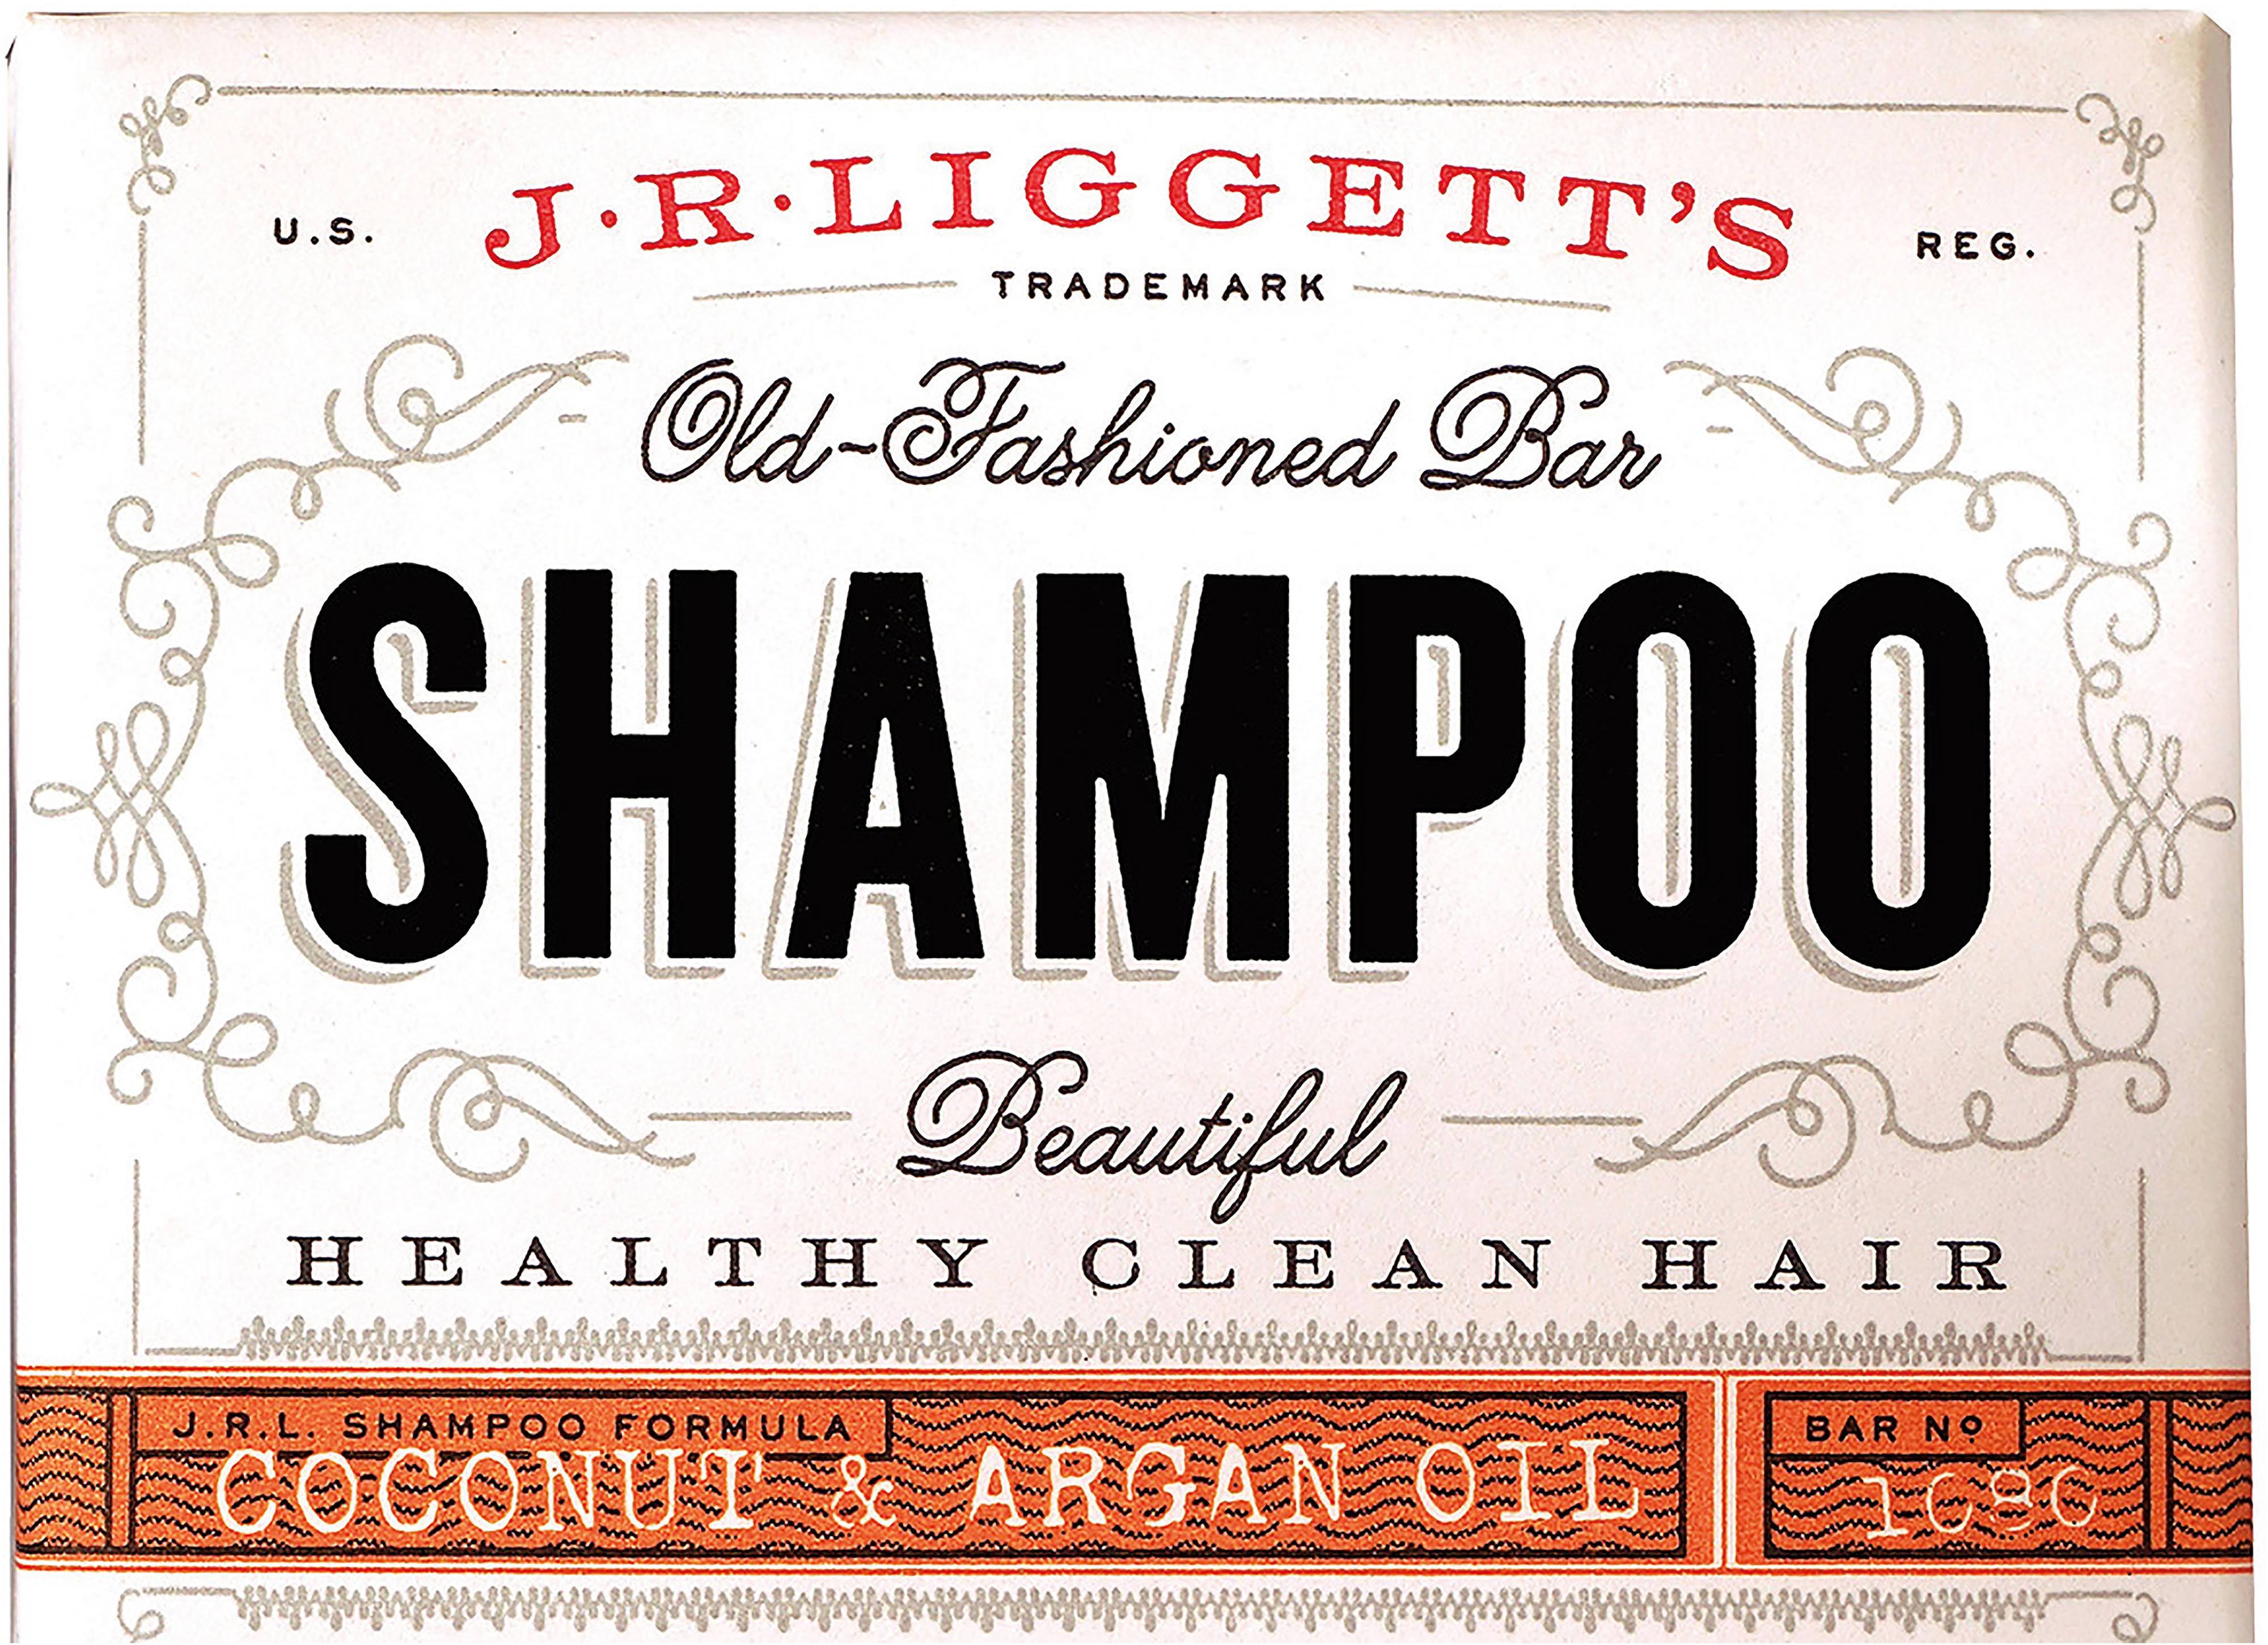 J.R. Ligget's Shampoo Bar Coconut & Argan Oil 99 g